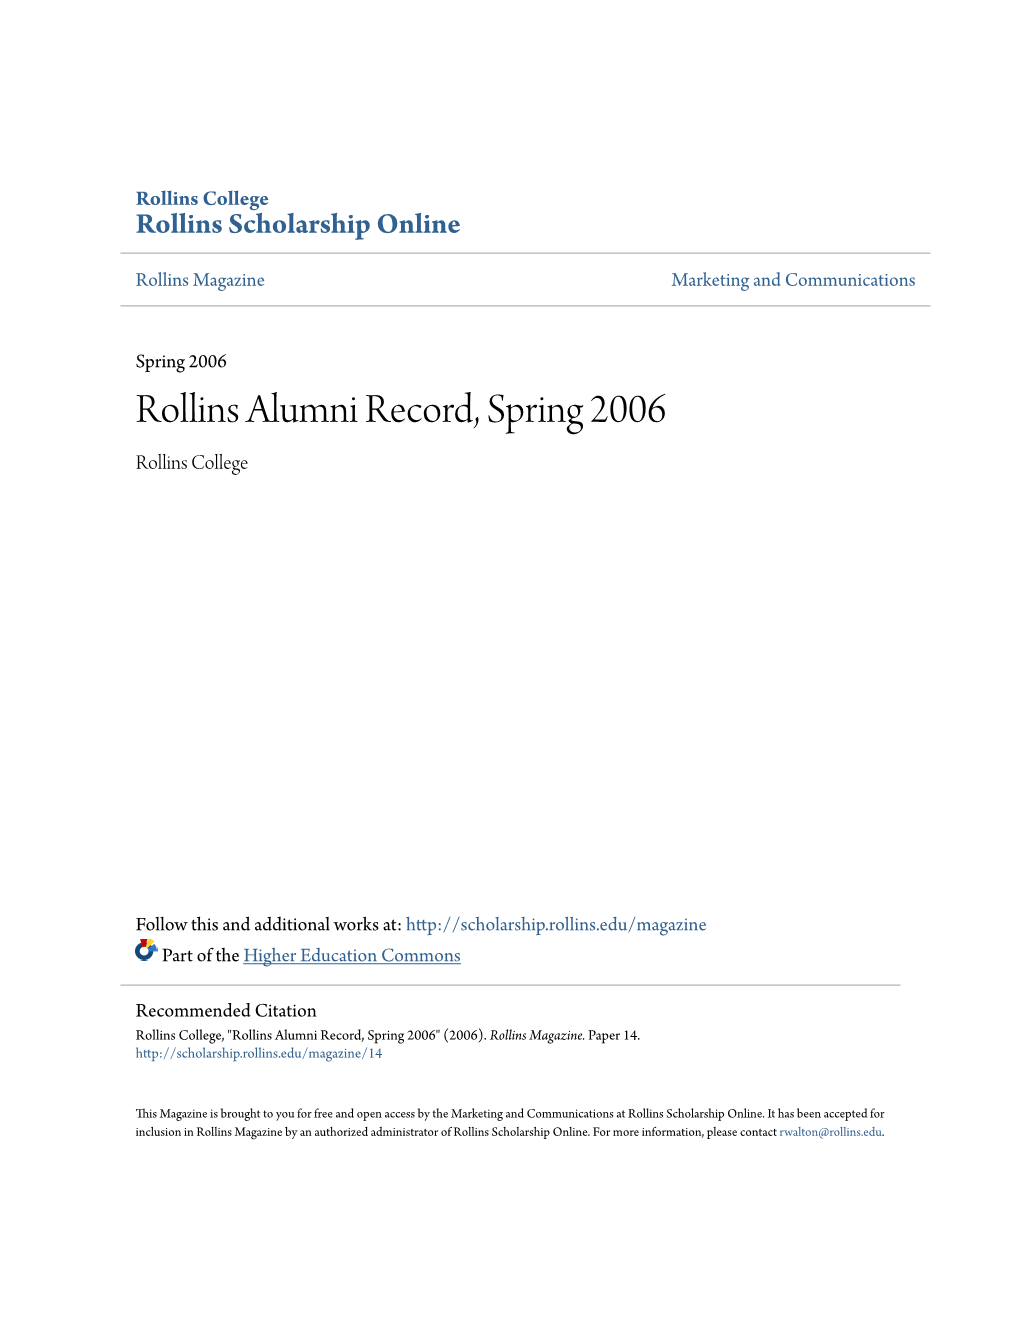 Rollins Alumni Record, Spring 2006 Rollins College